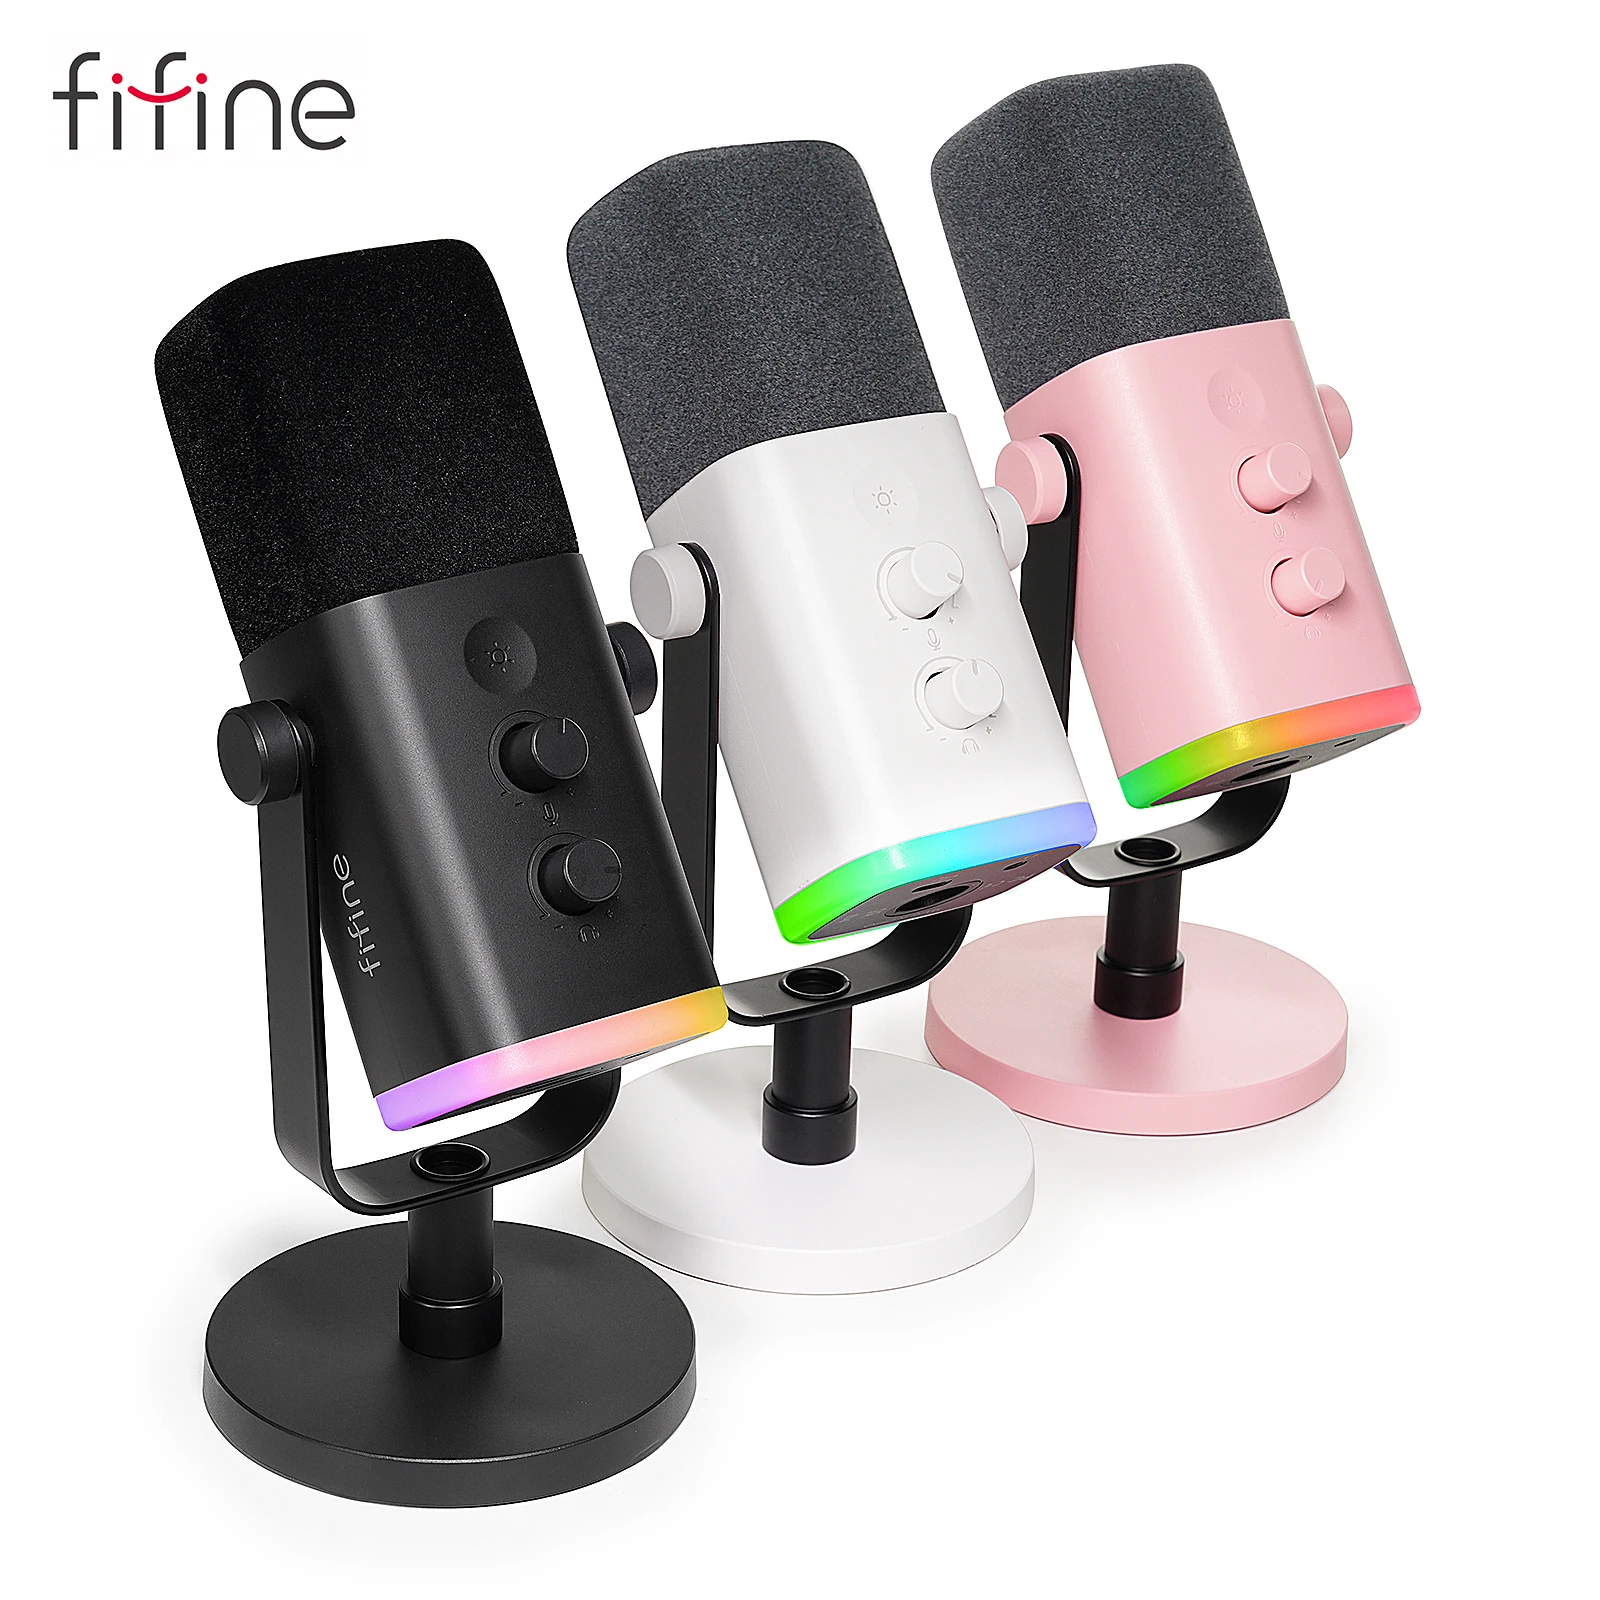 fifine am8 recording mic desktop microfono